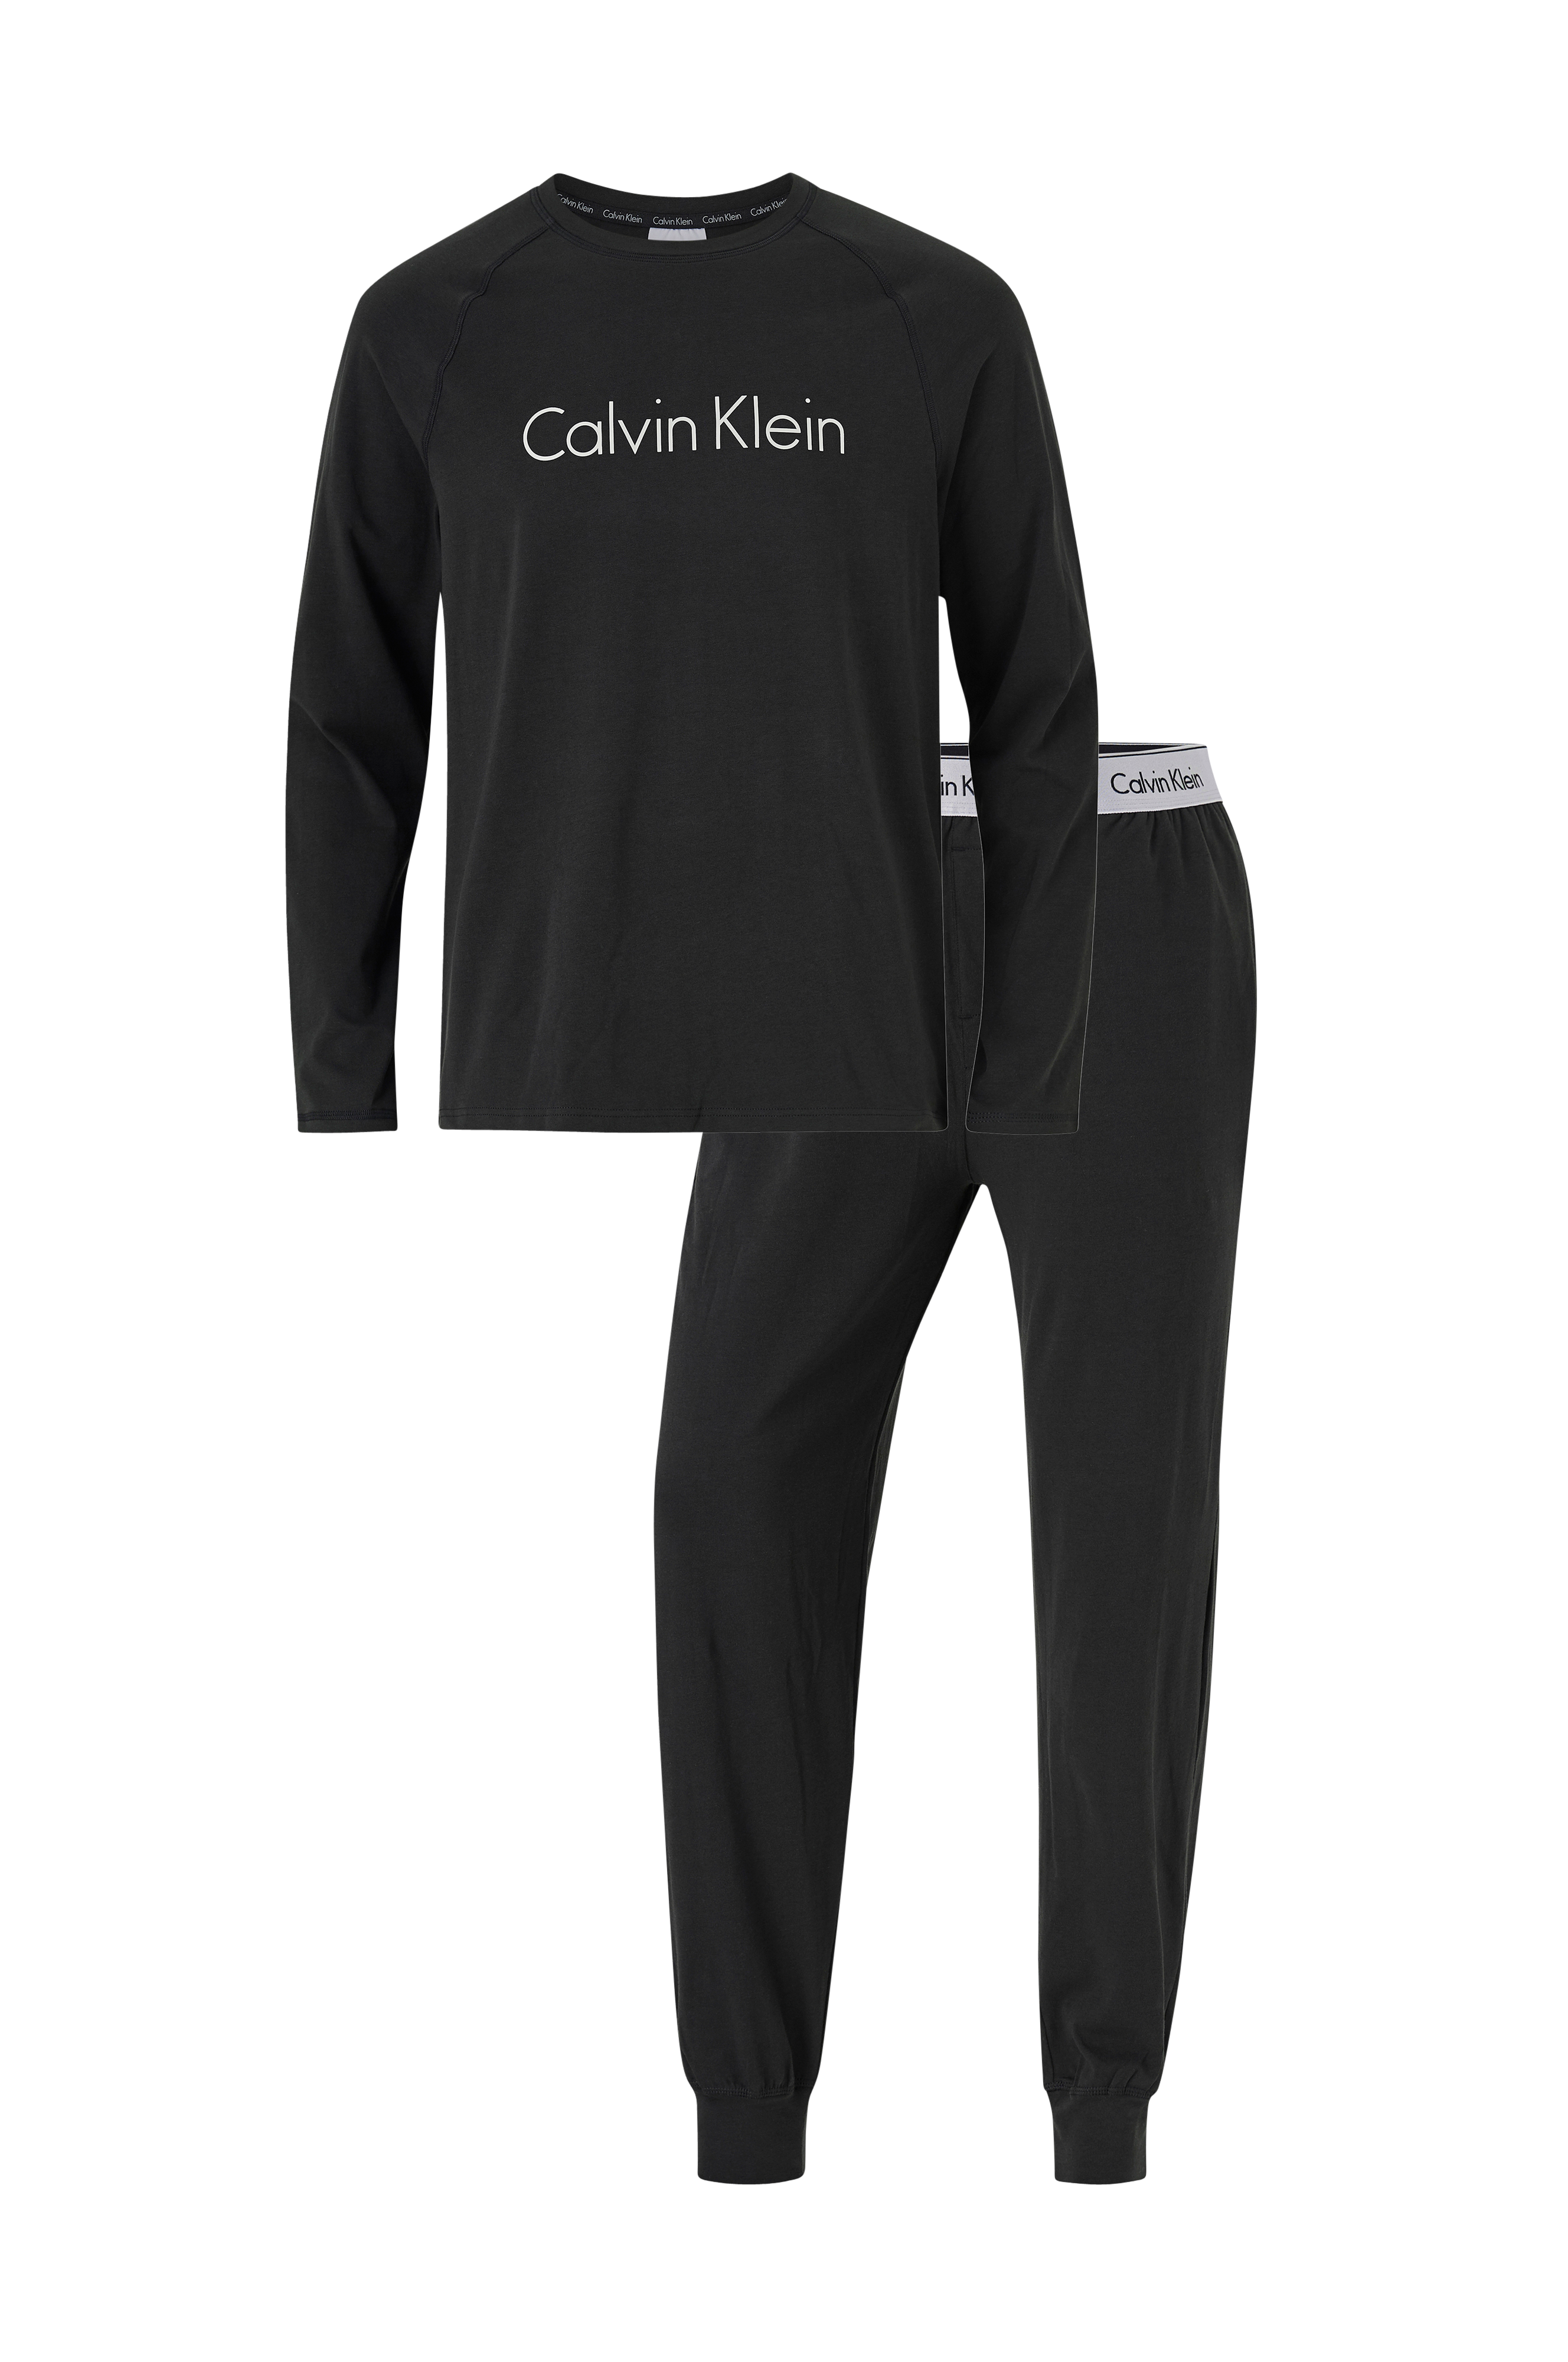 Calvin Klein Underwear Pyjamas Knit L/S Pant Set Sort - Pyjamas | Ellos.dk